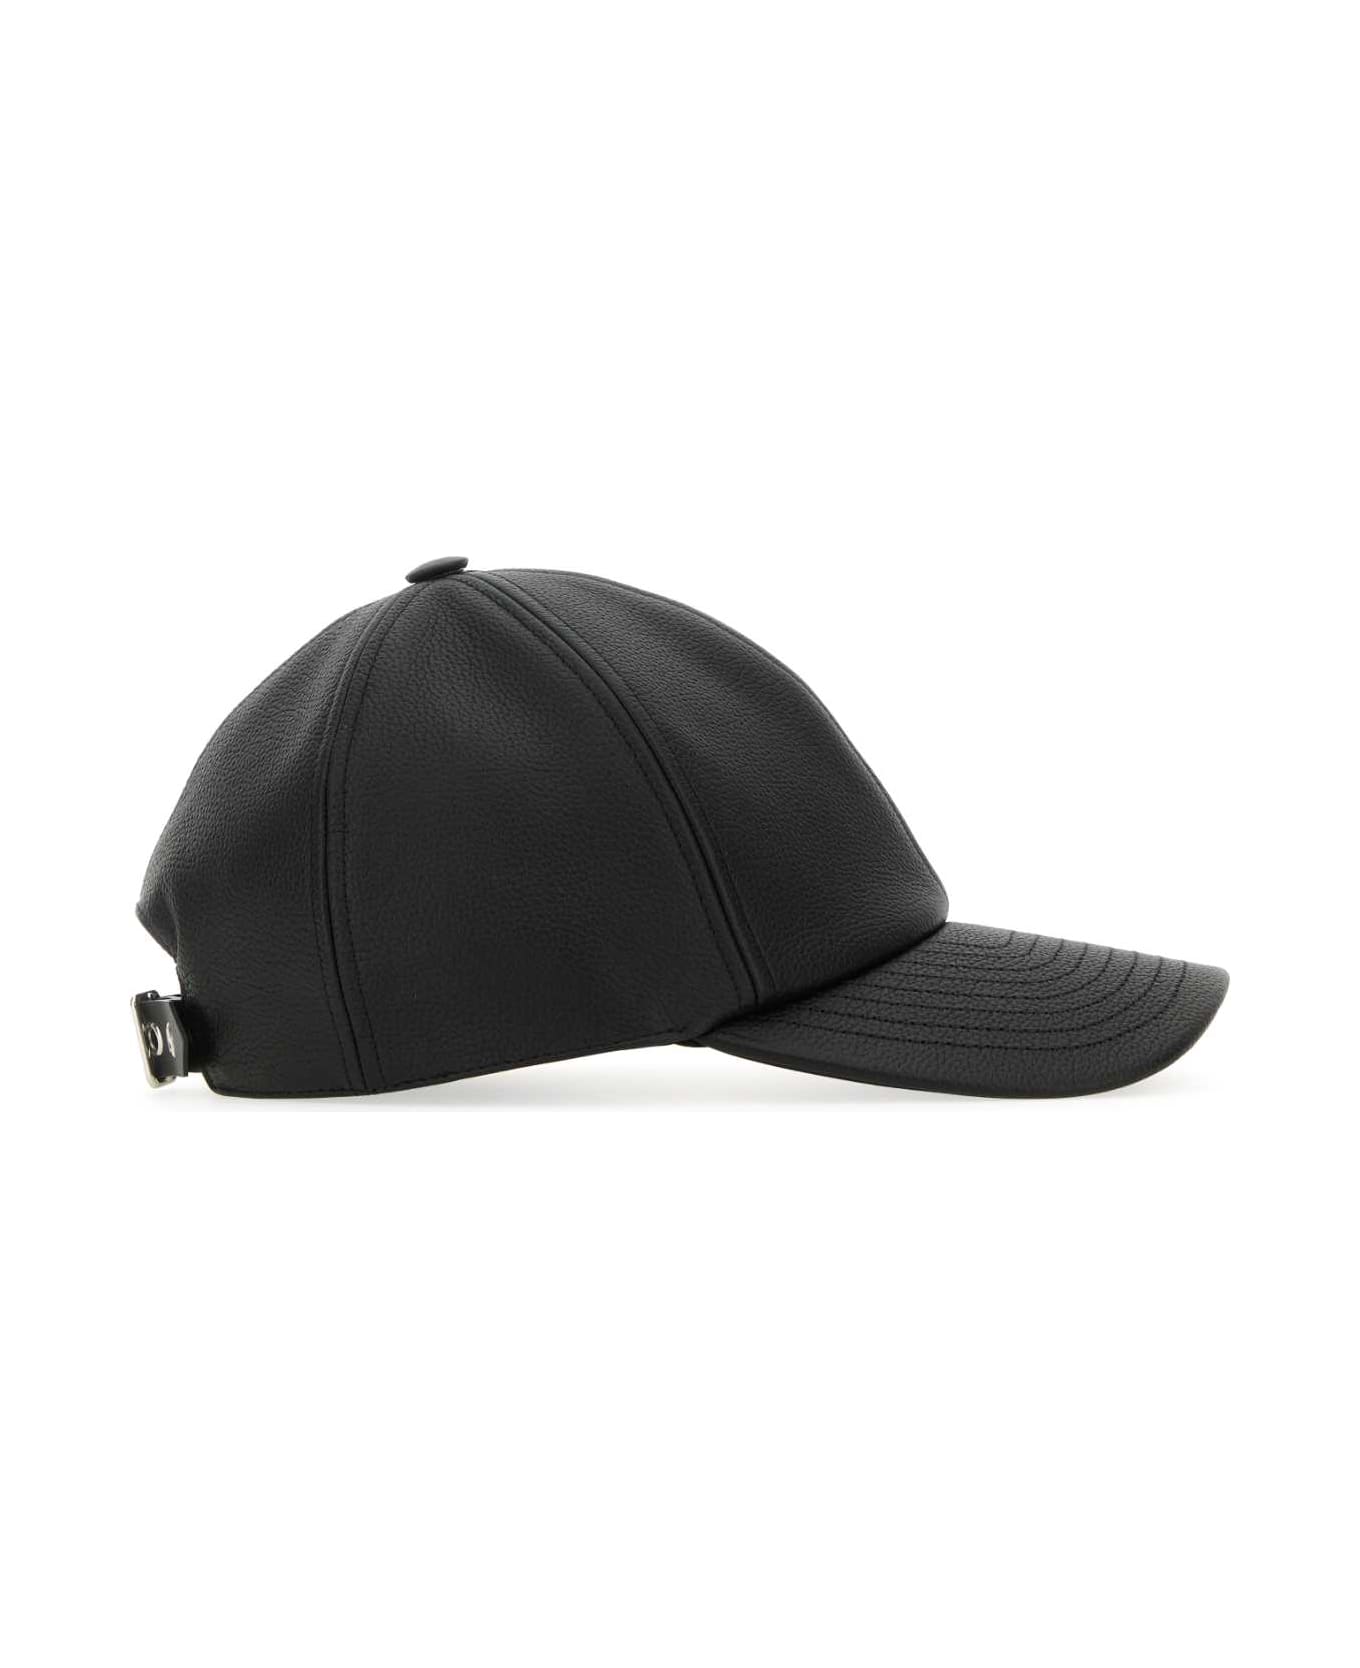 Courrèges Black Leather Baseball Cap - Black